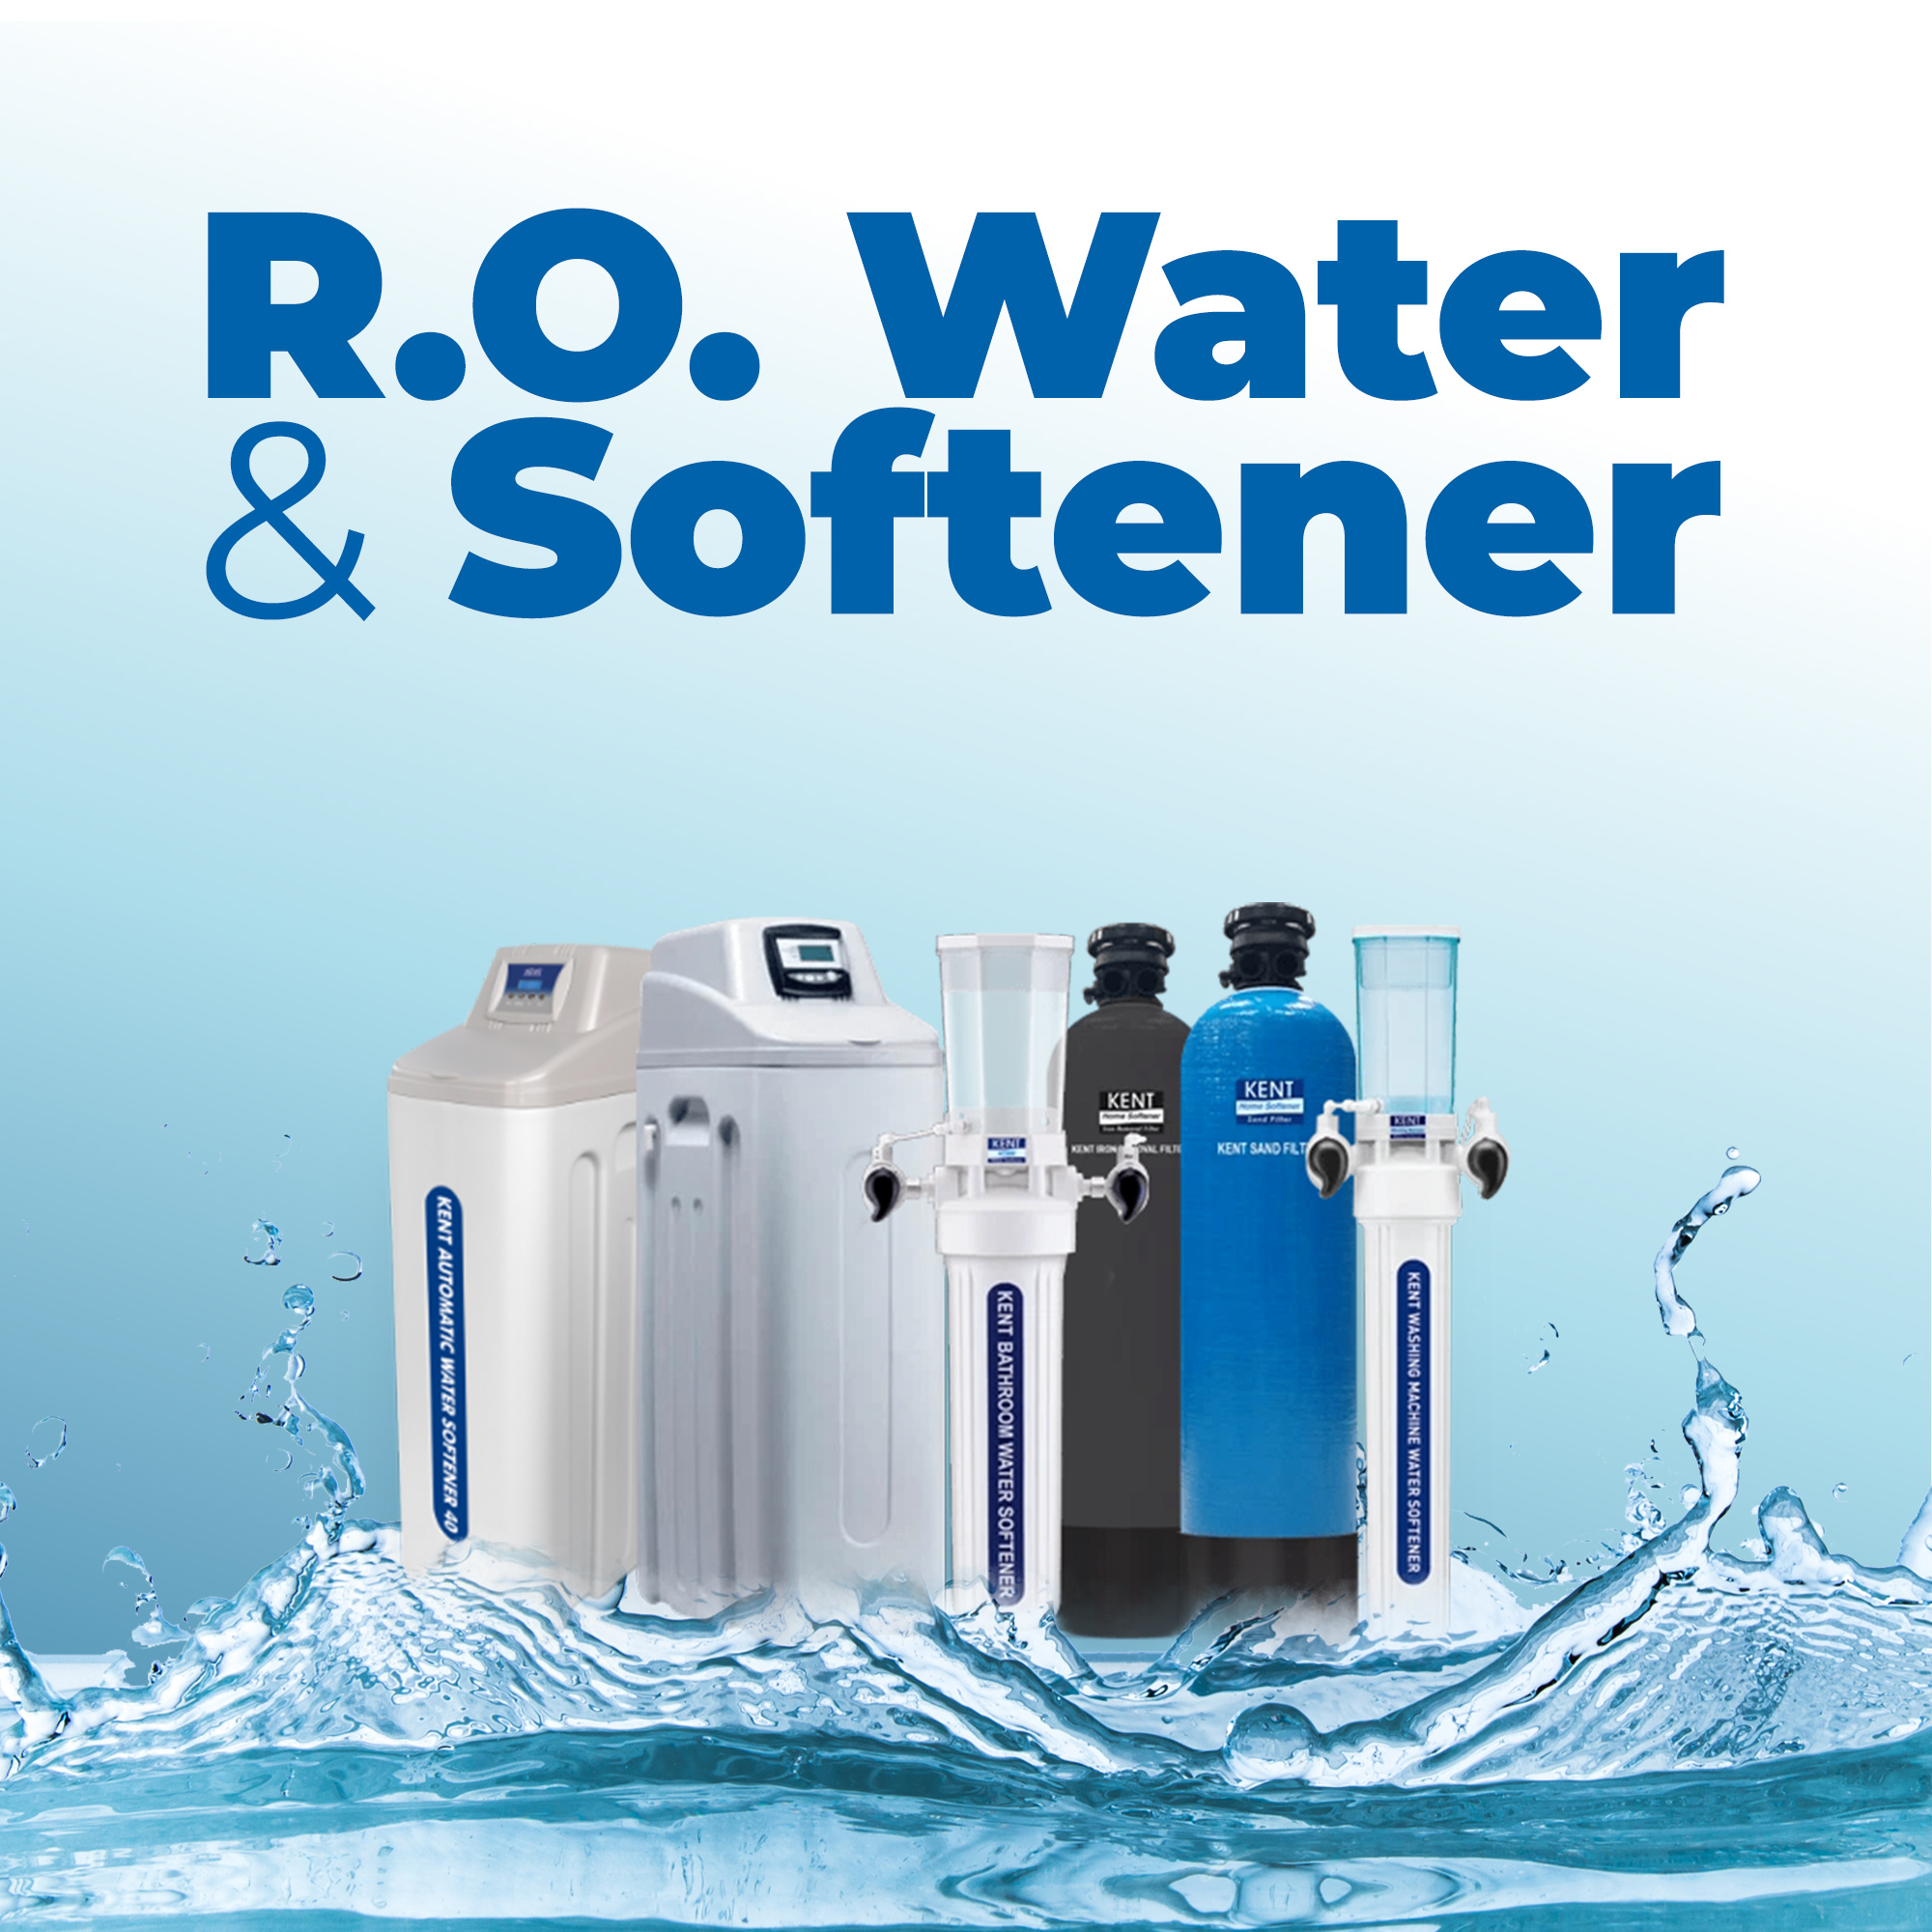 R.O. Water & Softener